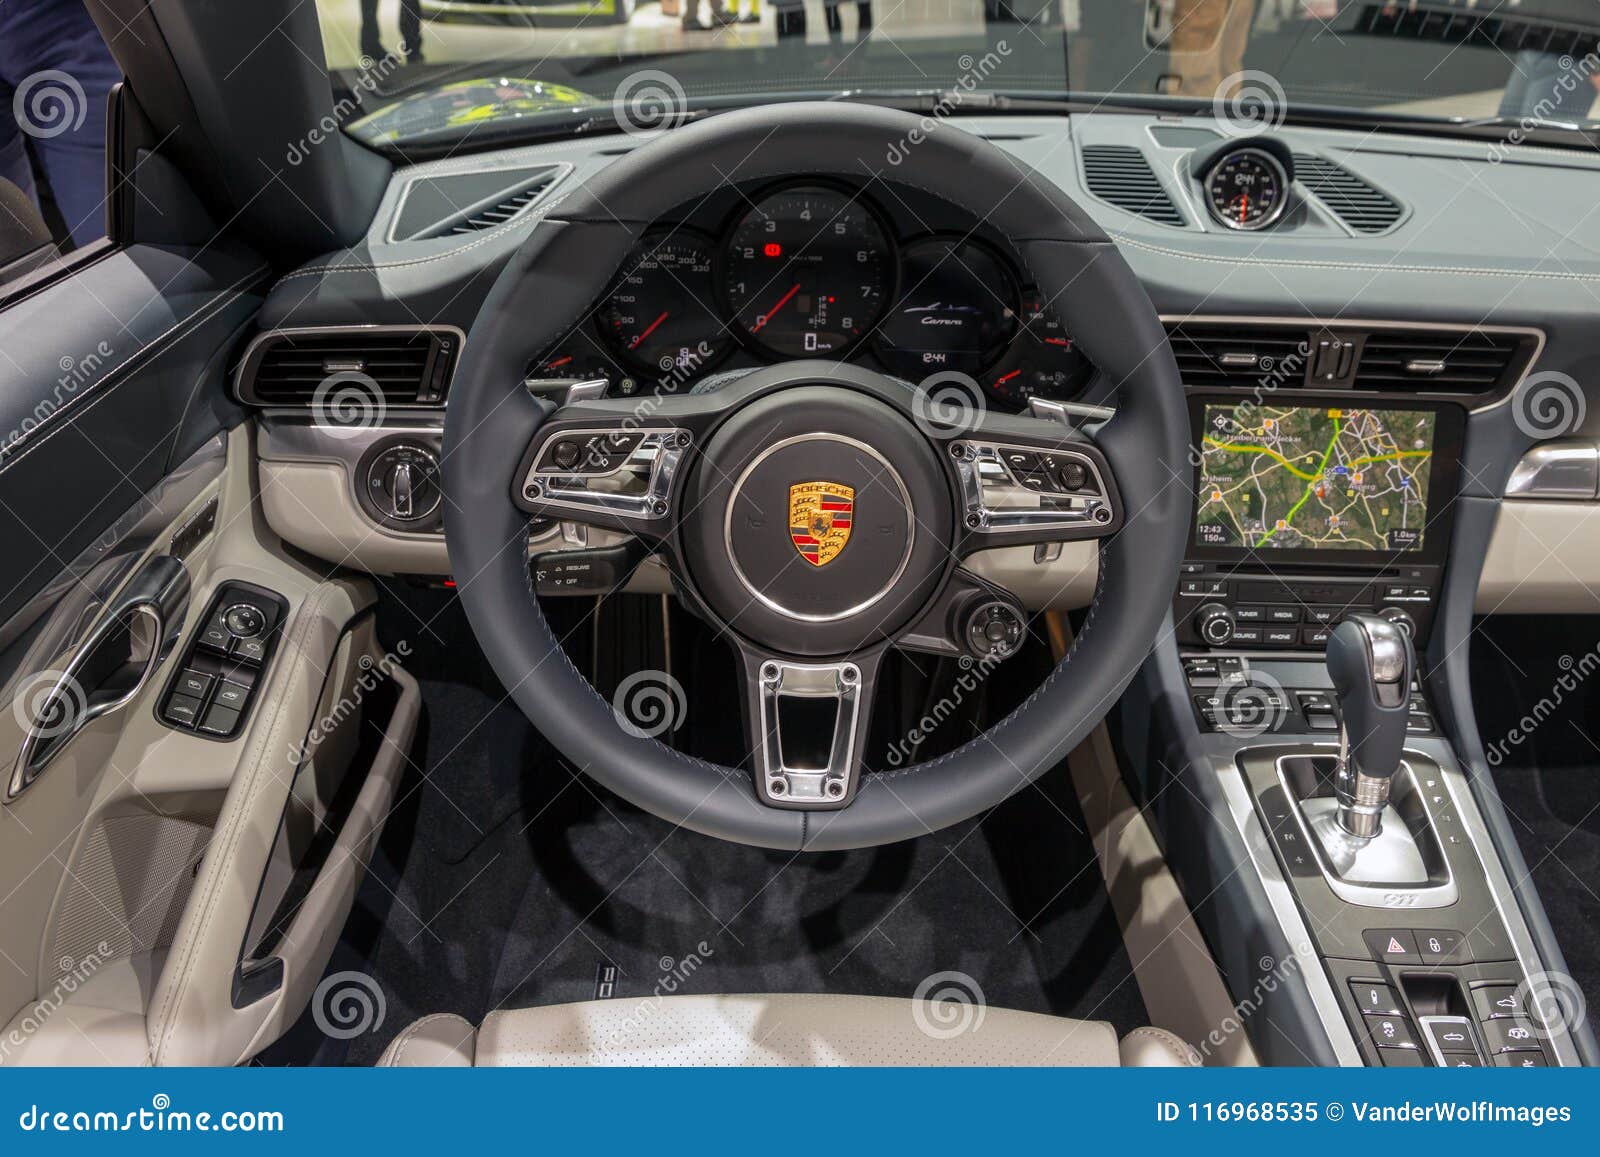 Porsche 911 Carrera Sports Car Interior Dashboard Editorial